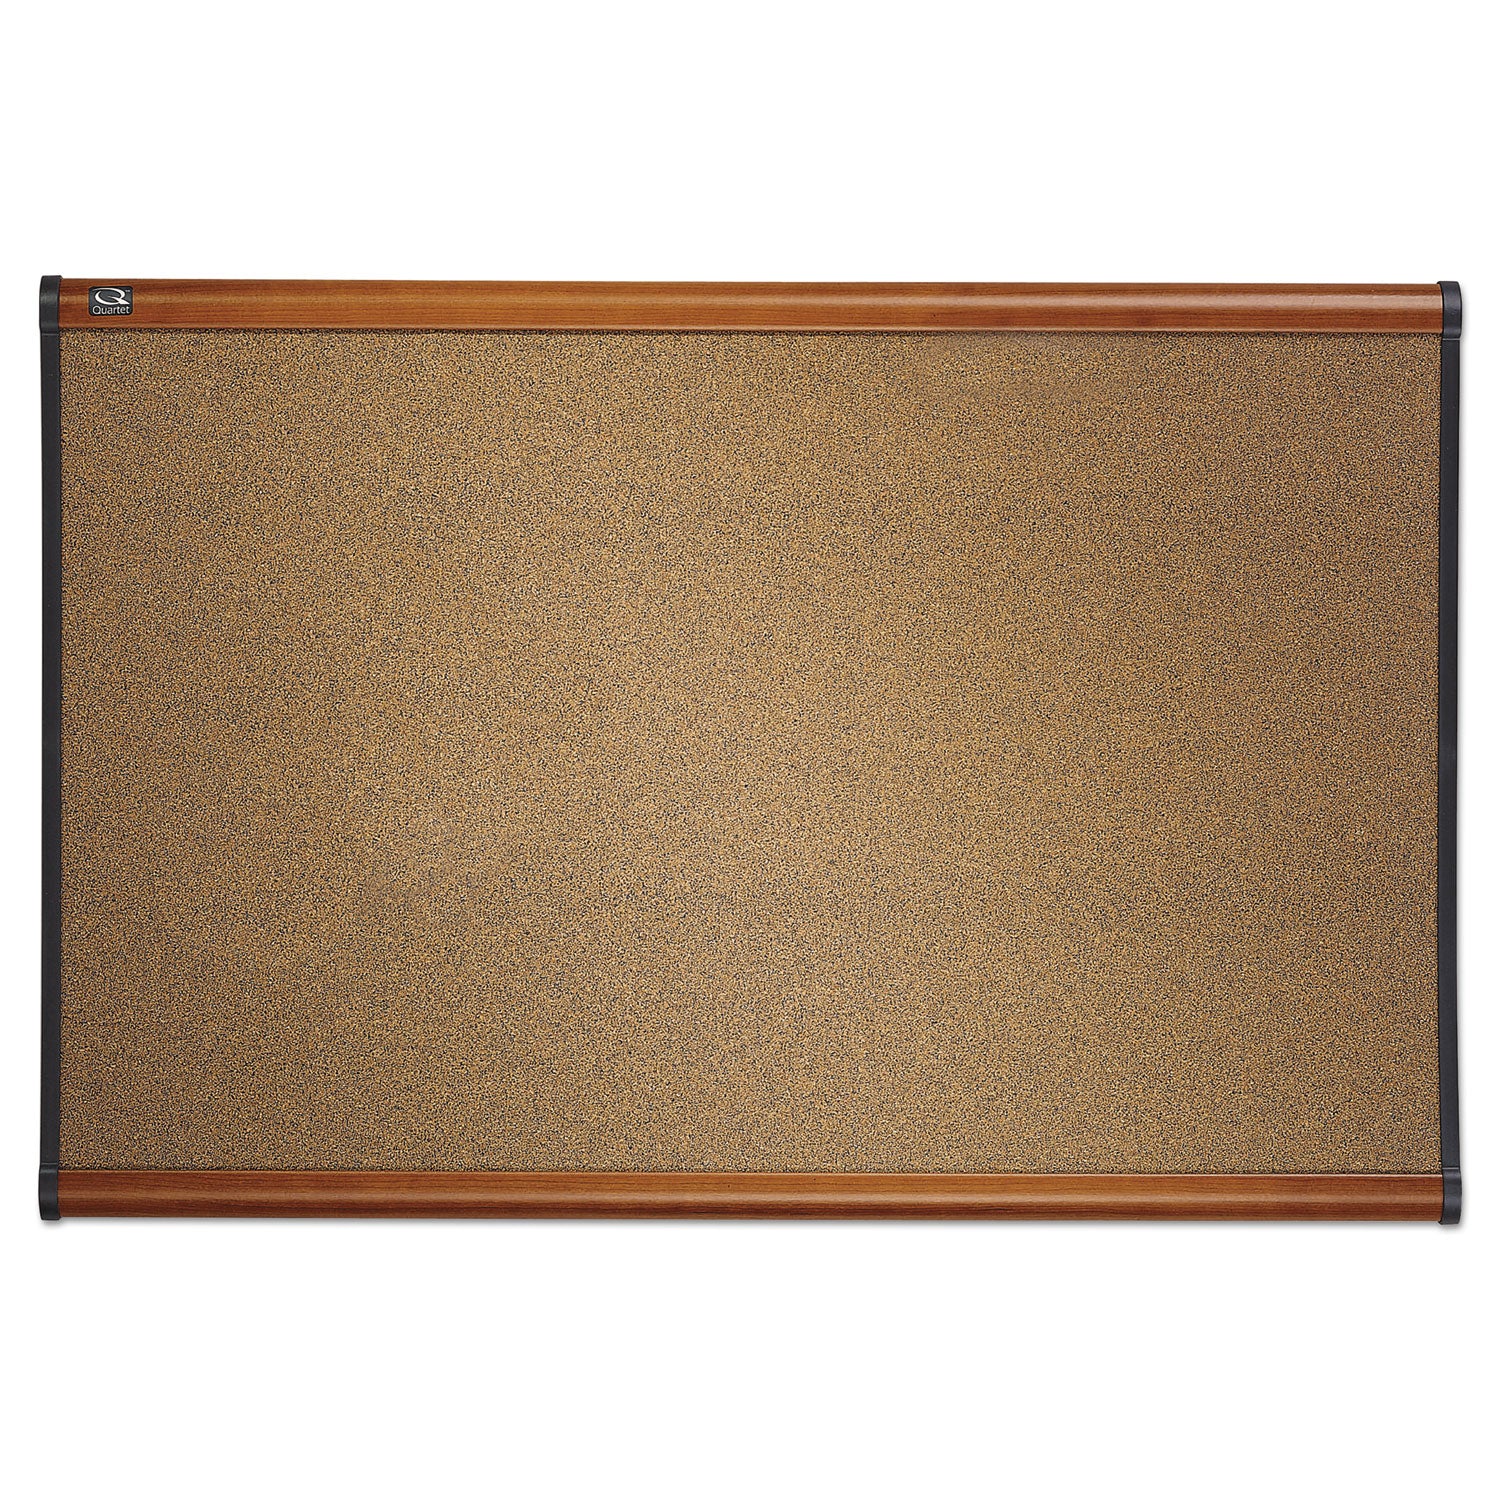 Prestige Colored Cork Bulletin Board, 36 x 24, Brown Surface, Light Cherry Fiberboard/Plastic Frame - 